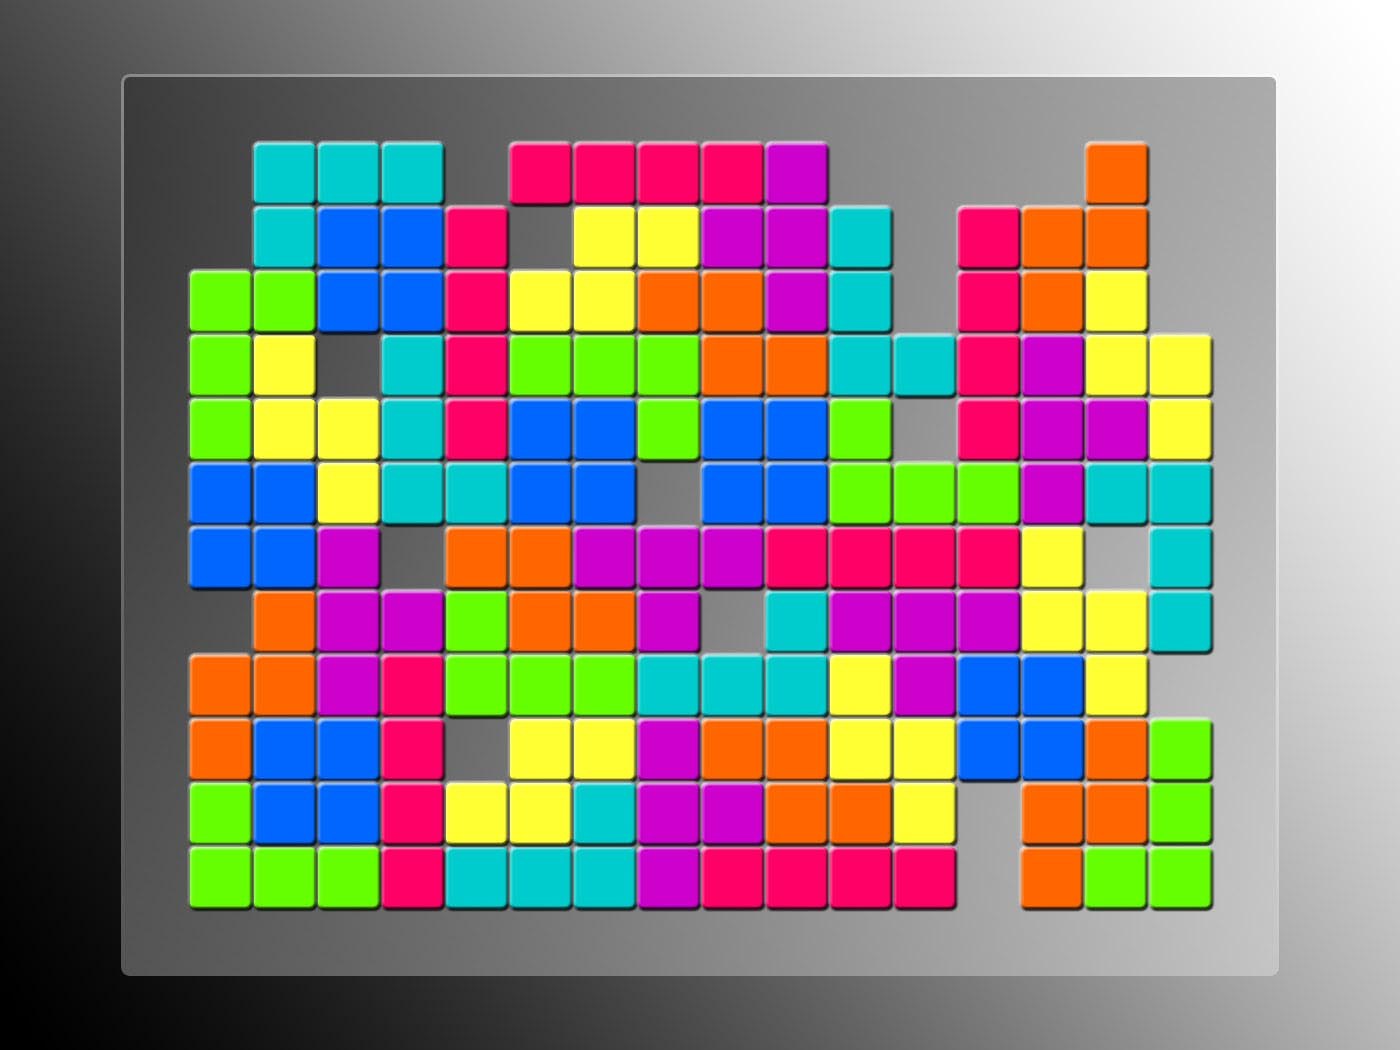 Кубики убирать по цвету игра. Игра Тетрис. Tetris. Тетрис игра Тетрис. Тэтрис игра Тэтрис игра Тэтрис игра Тетрис игра Тетрис игра. Тетрис 1990 года игра.